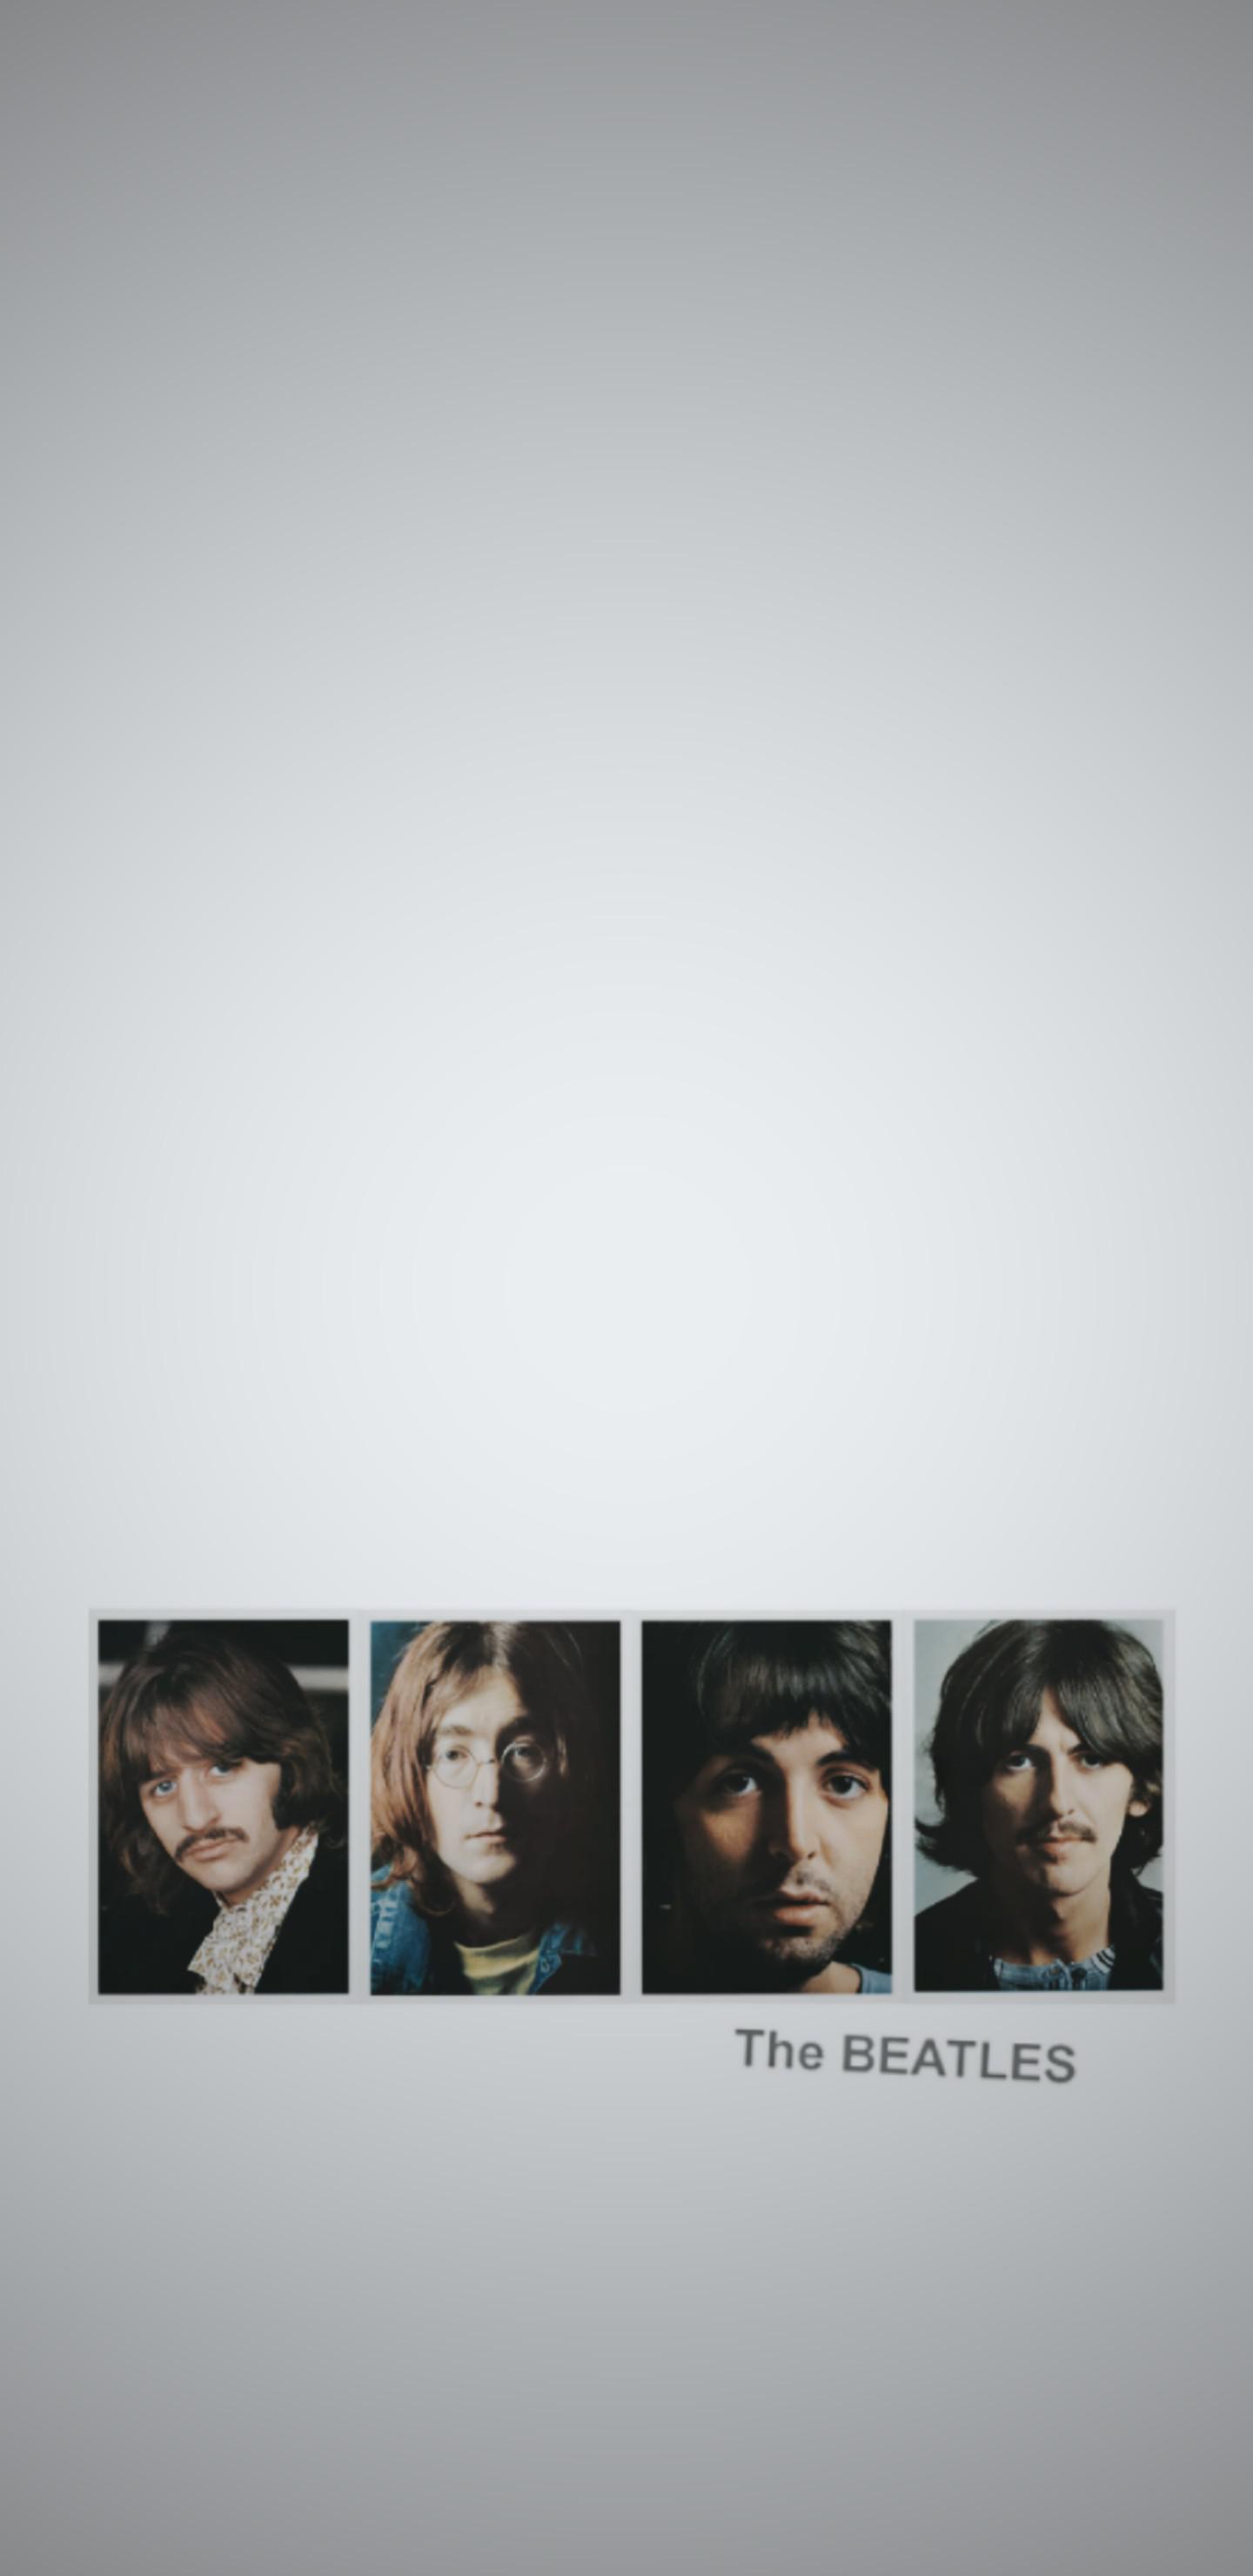 The Beatles Wallpaper Iphone Flash Sales GET 53 OFF  wwwislandcrematoriumie